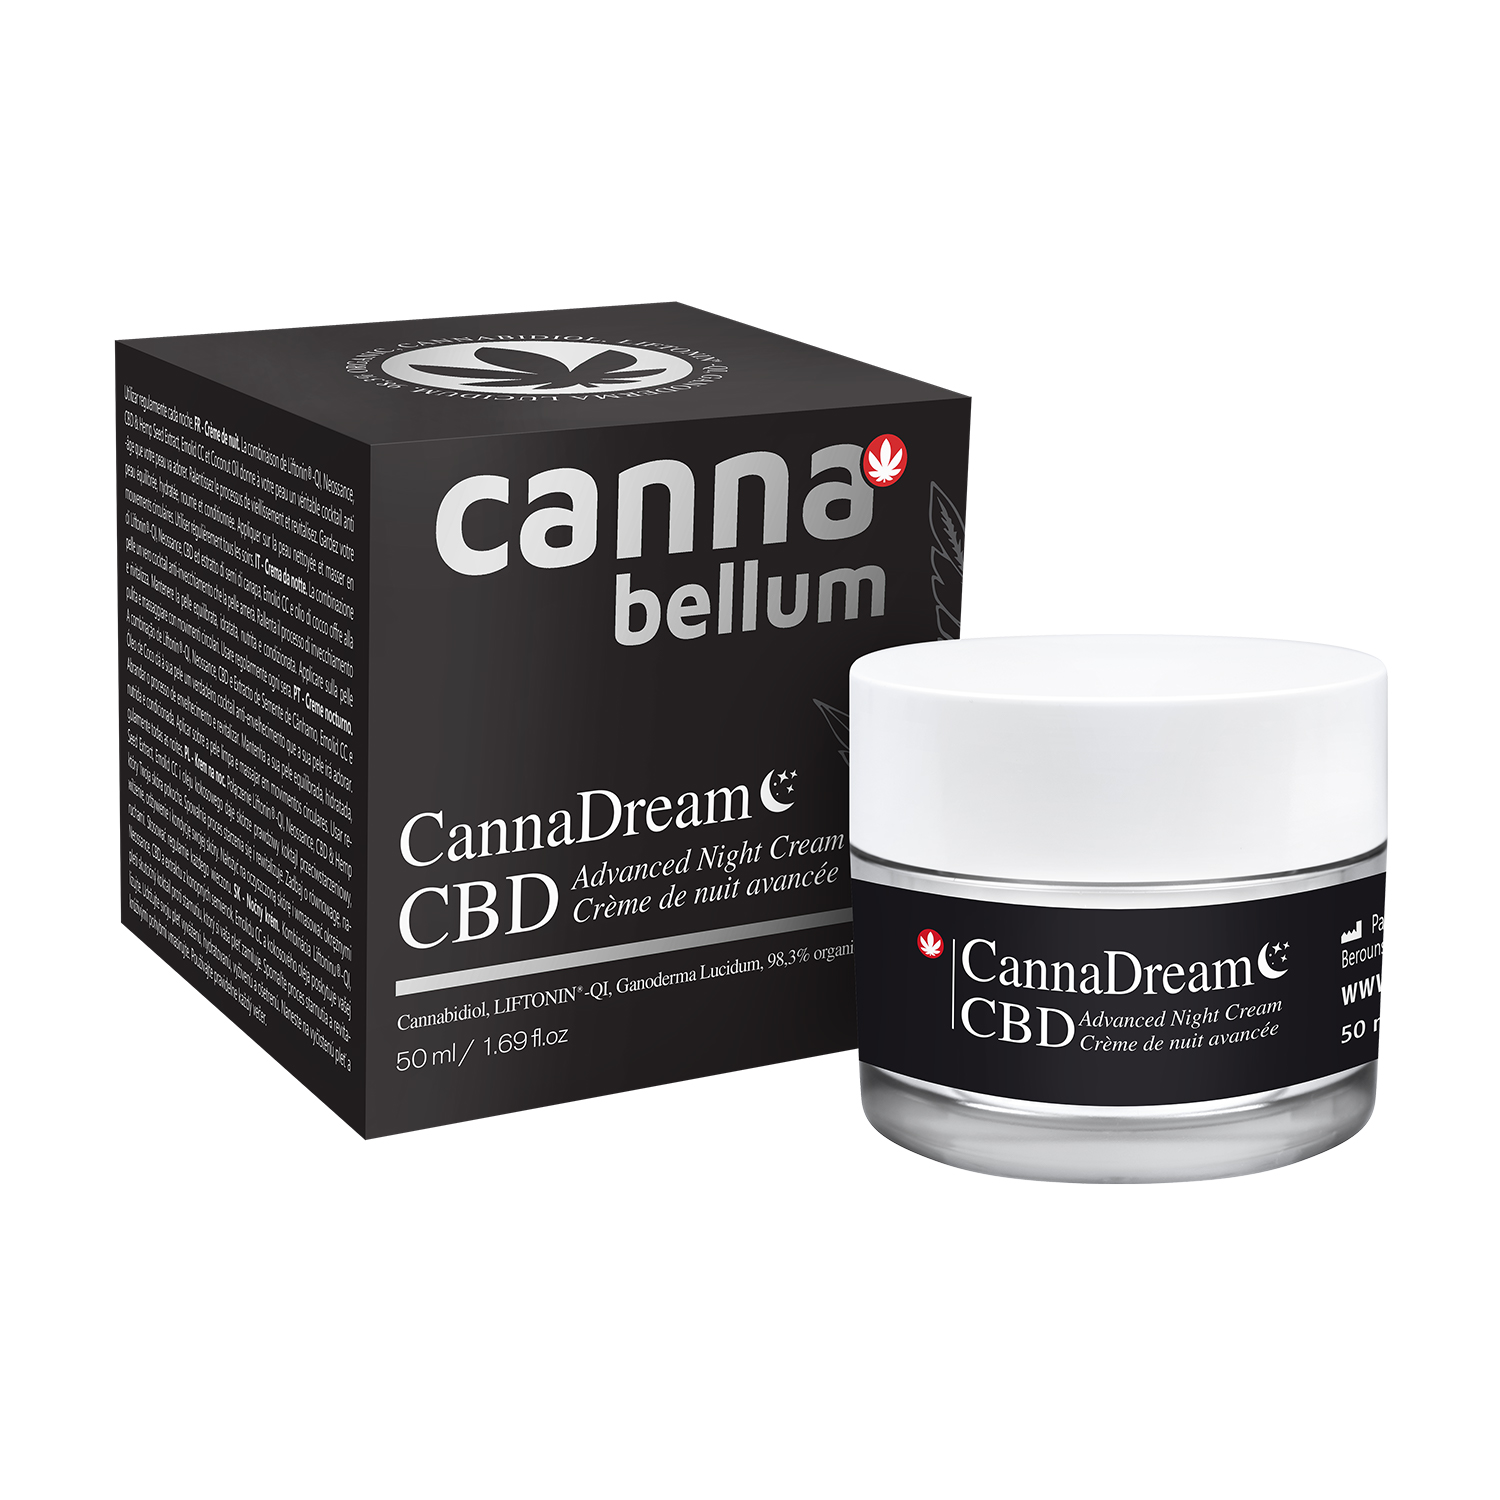 Cannabellum CannaDream advanced night cream50ml P1222 komplet WEB 101